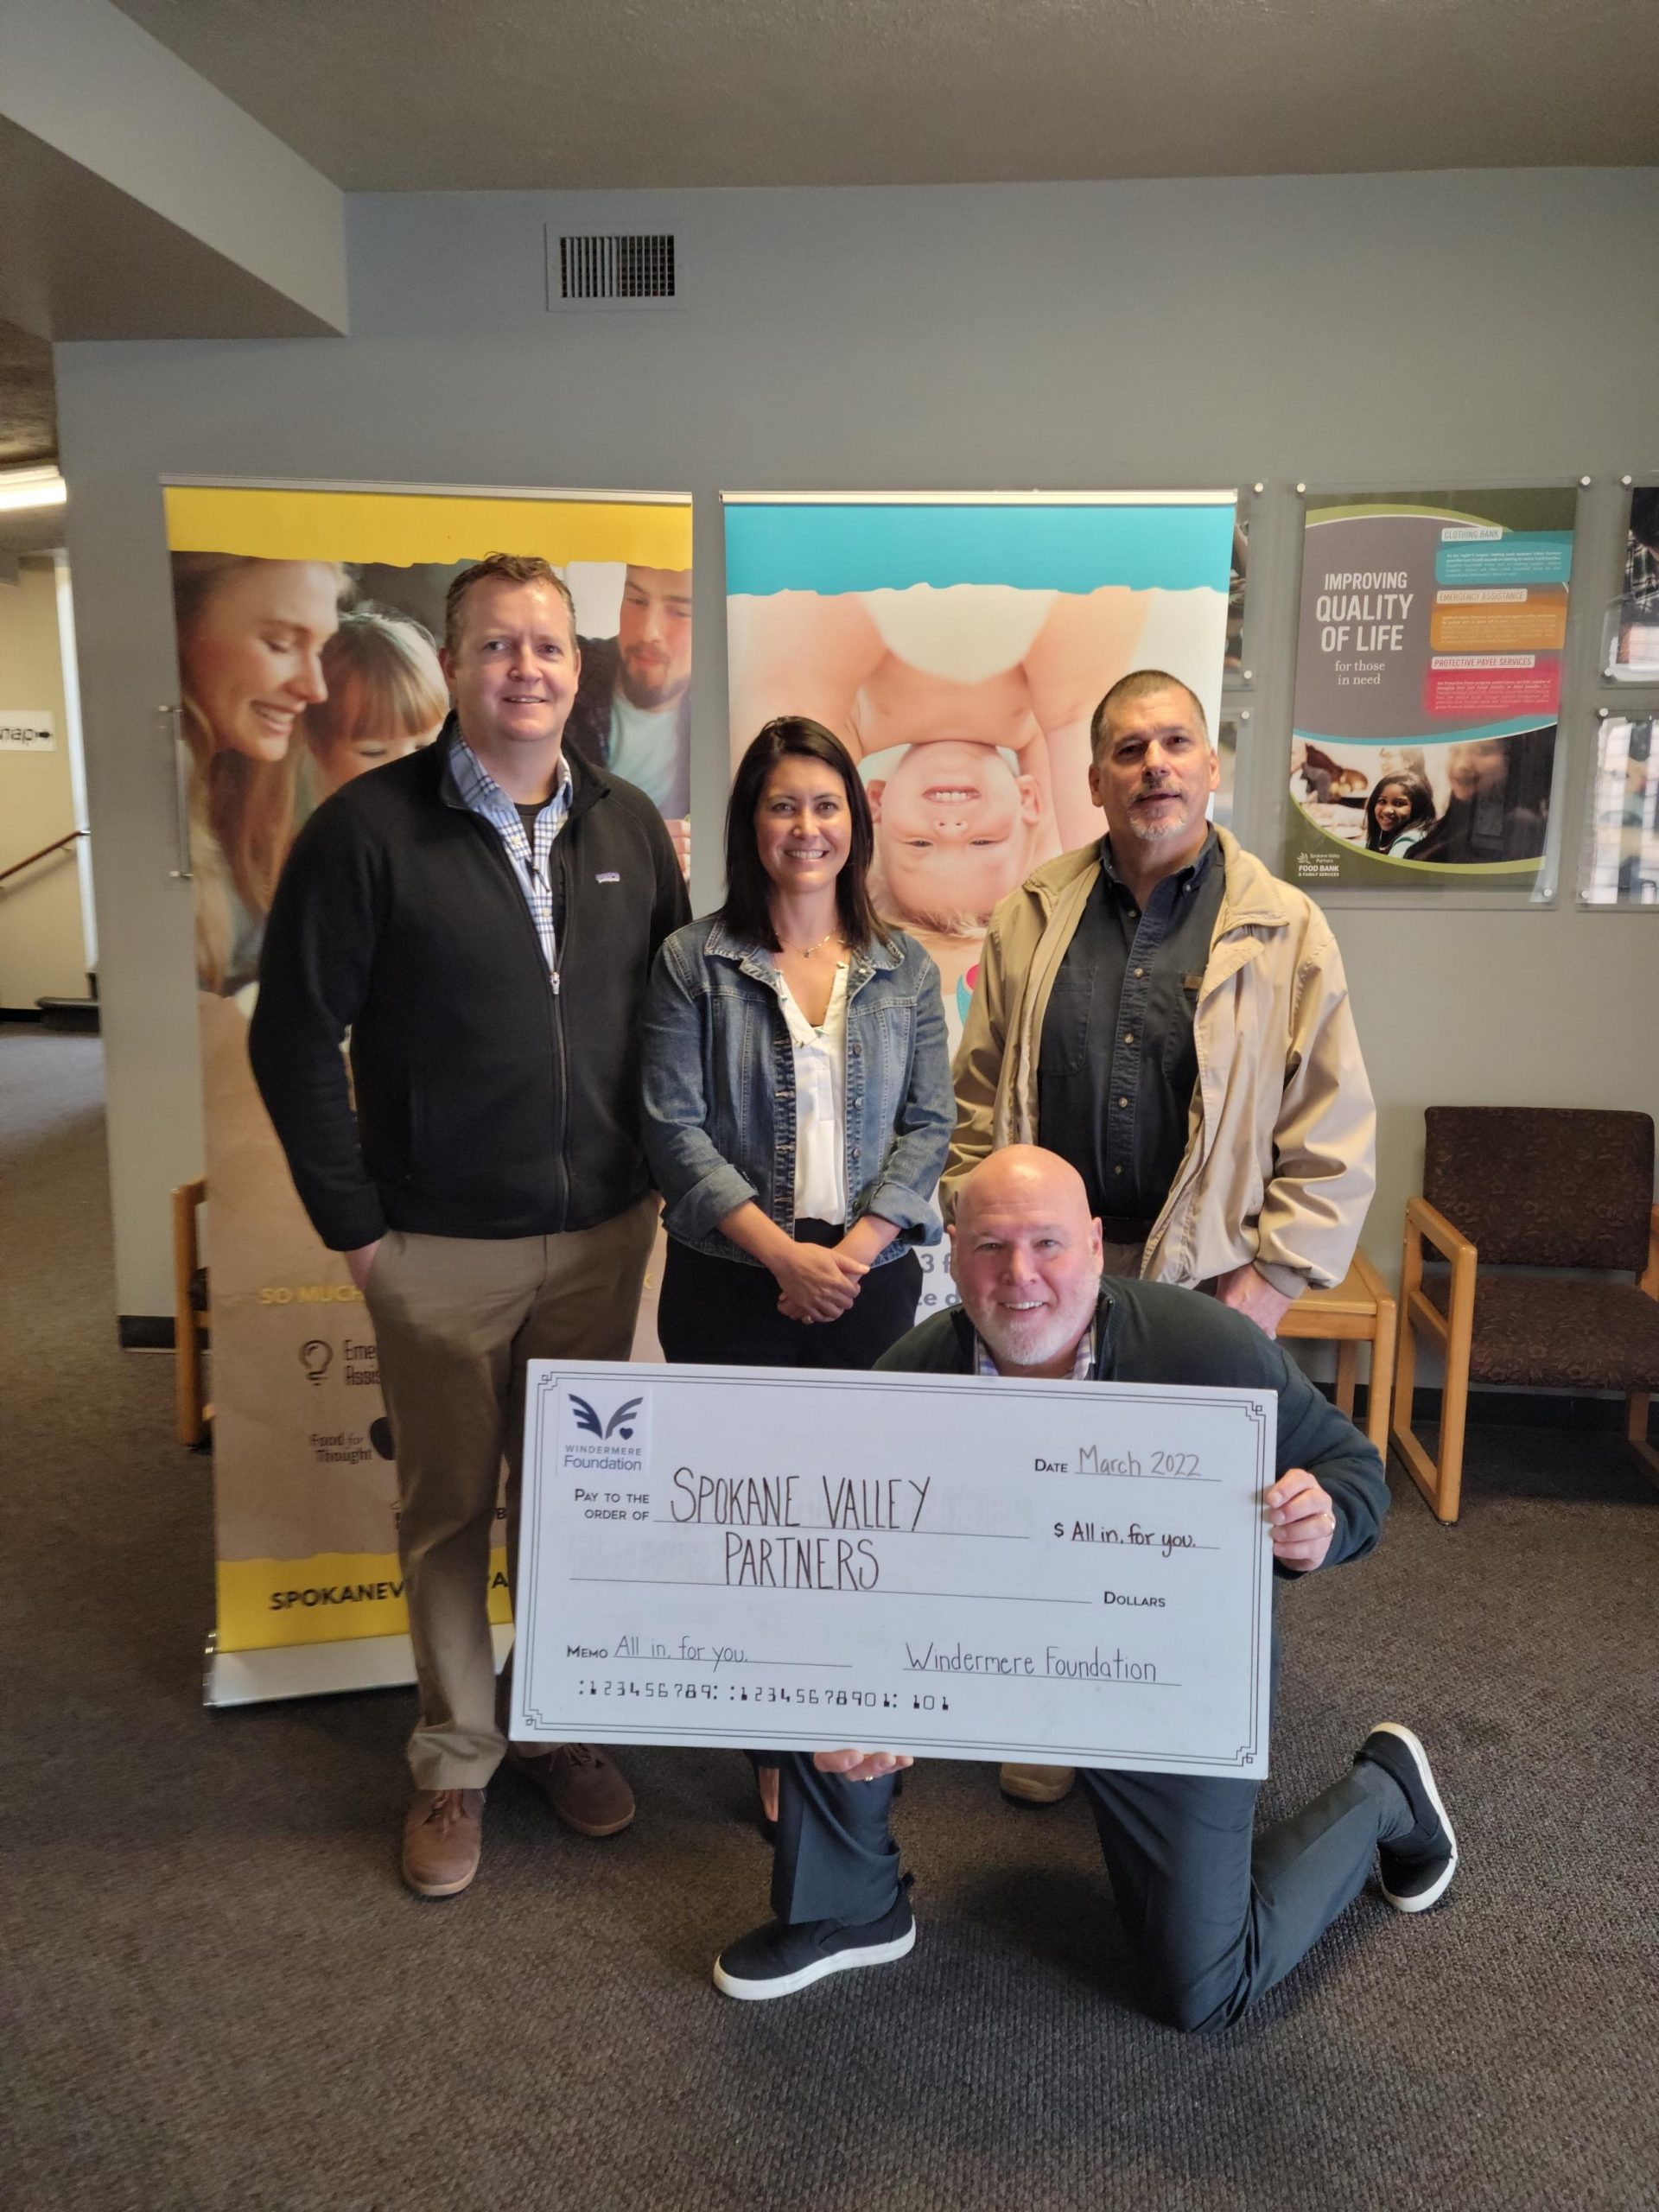 Spokane-Valley-Partners-organization with lifesize donation check